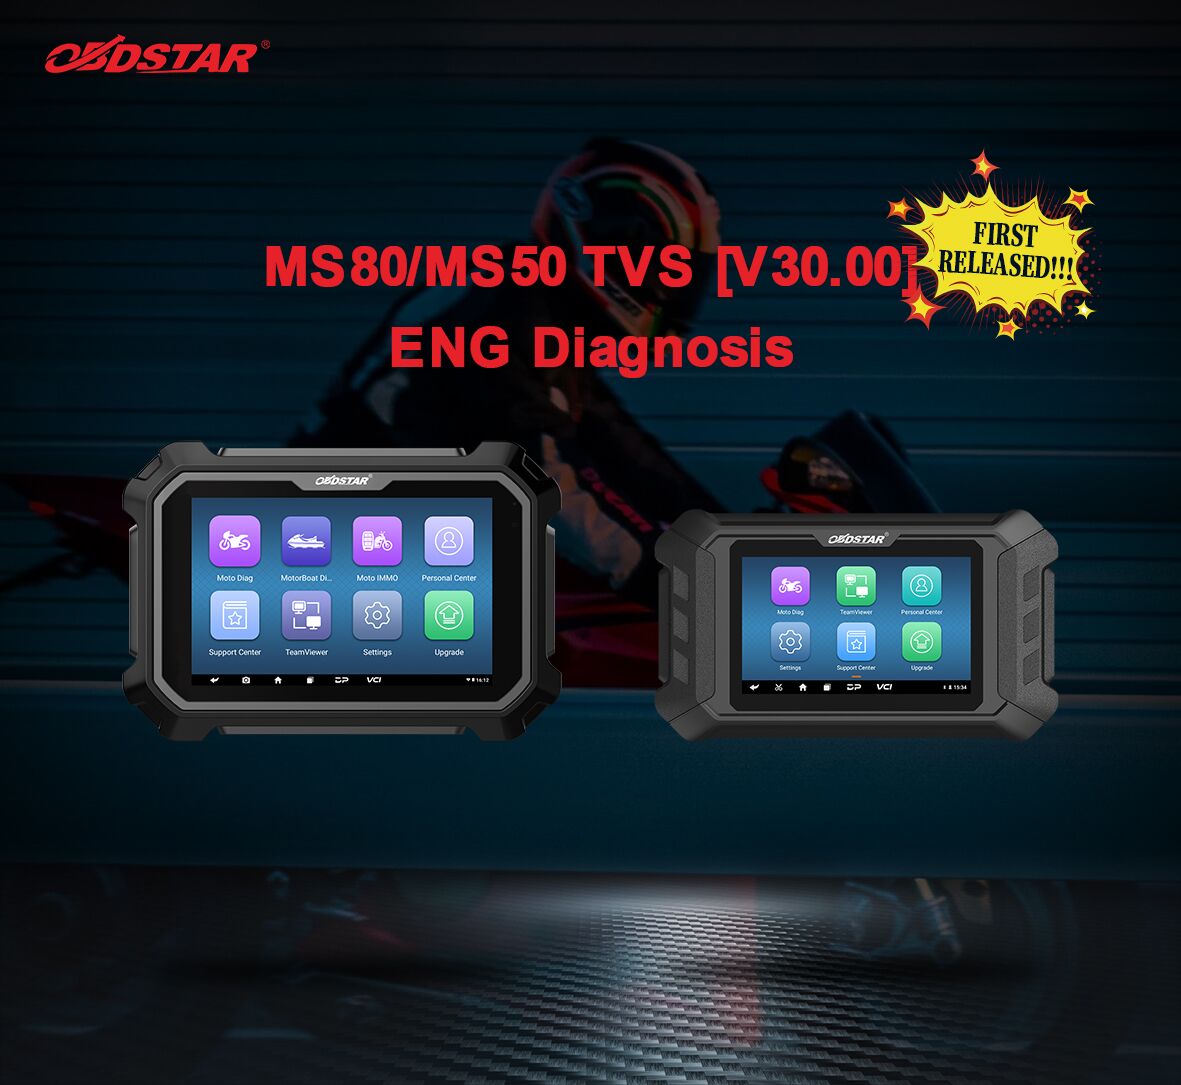 OBDSTAR MS80/MS50 TVS V30.00 Upgrade